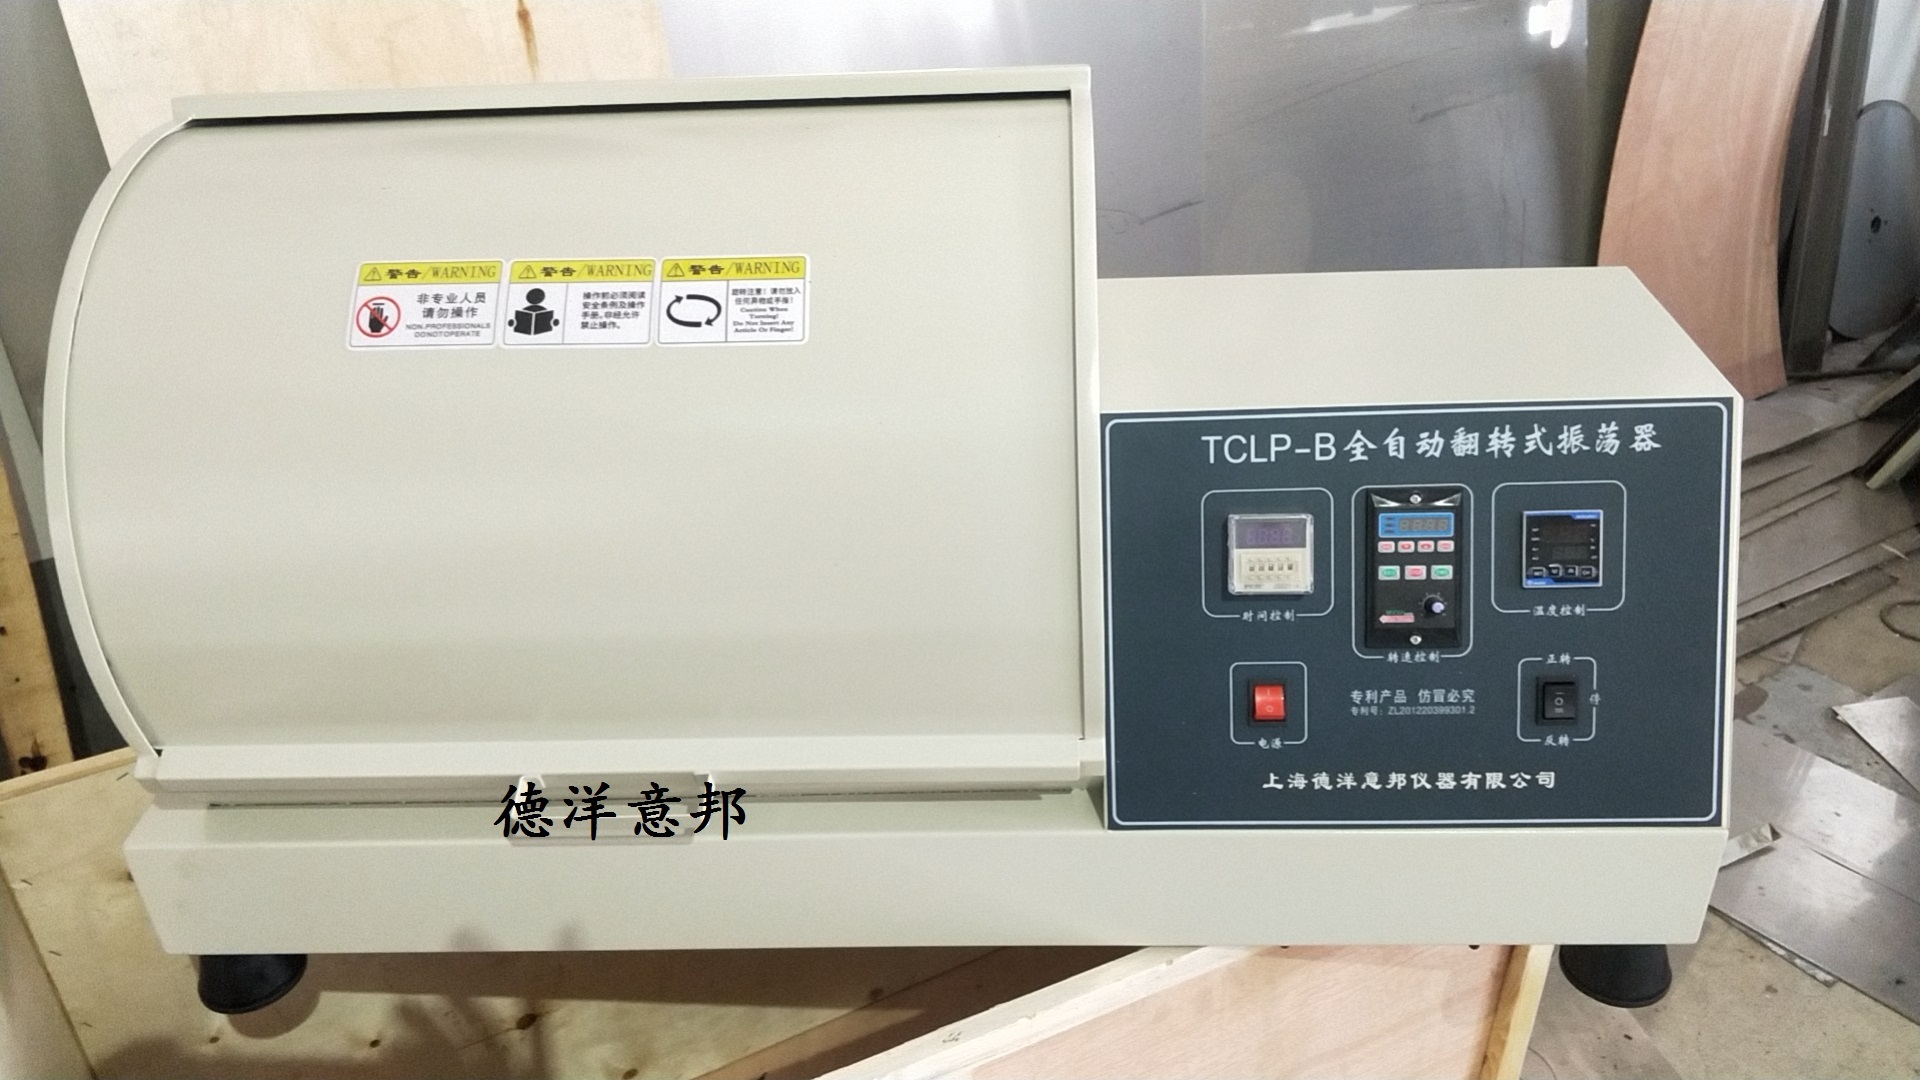 TCLP-B全自动恒温翻转式振荡器